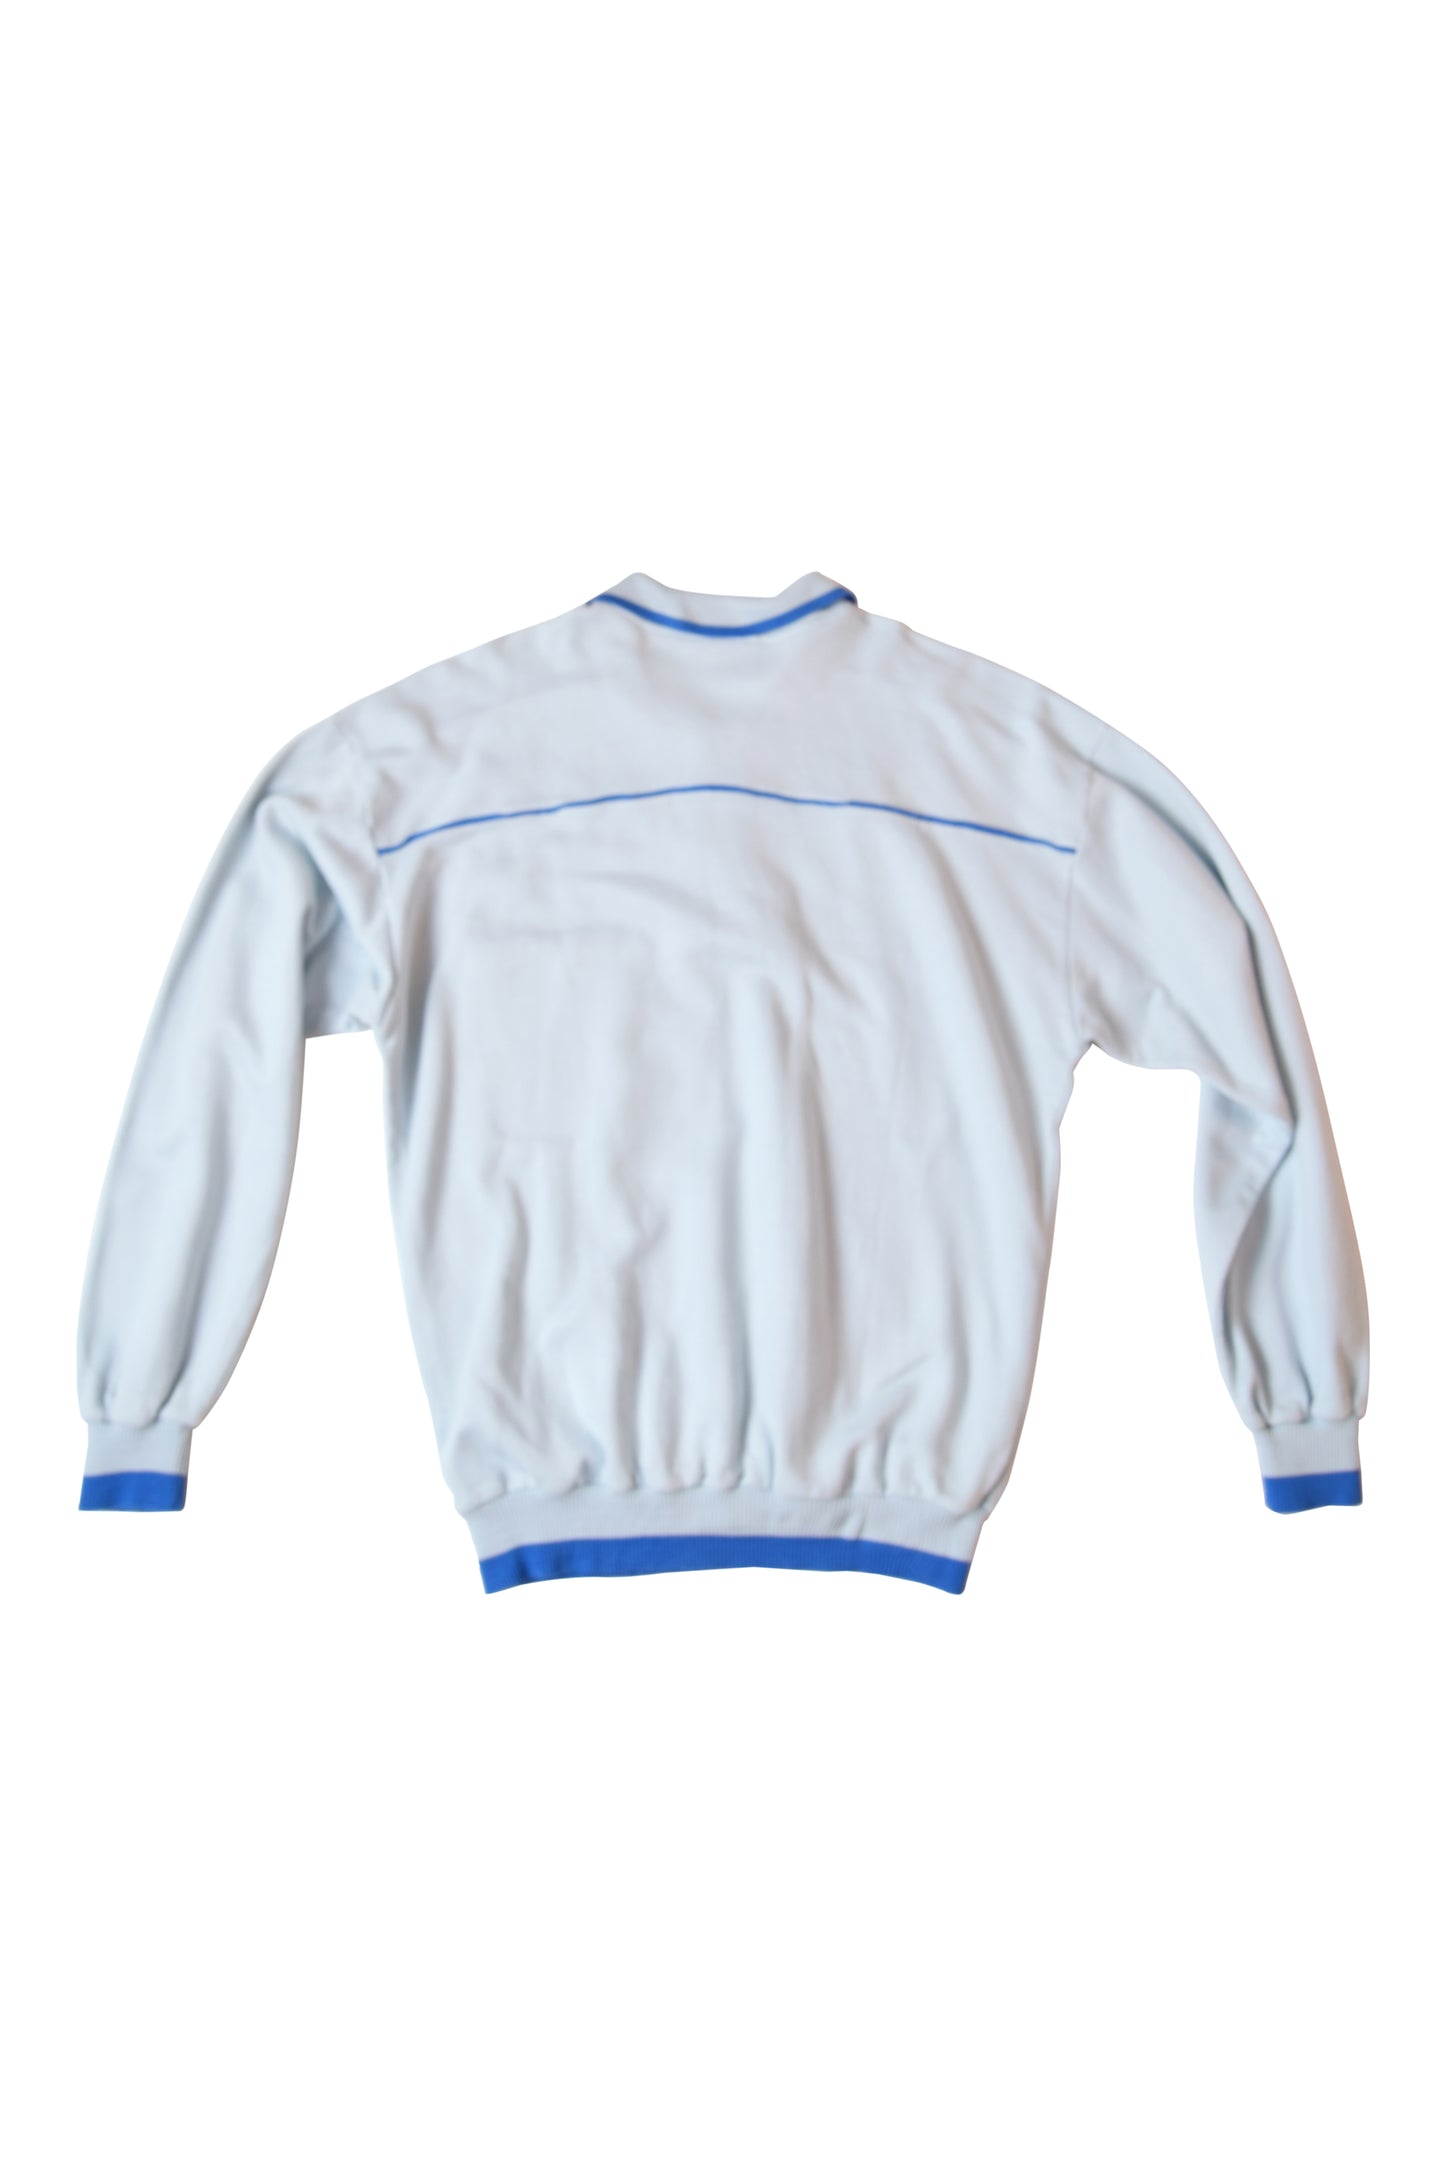 Vintage Puma Sweatshirt 80's Made in Italy Size L-XL